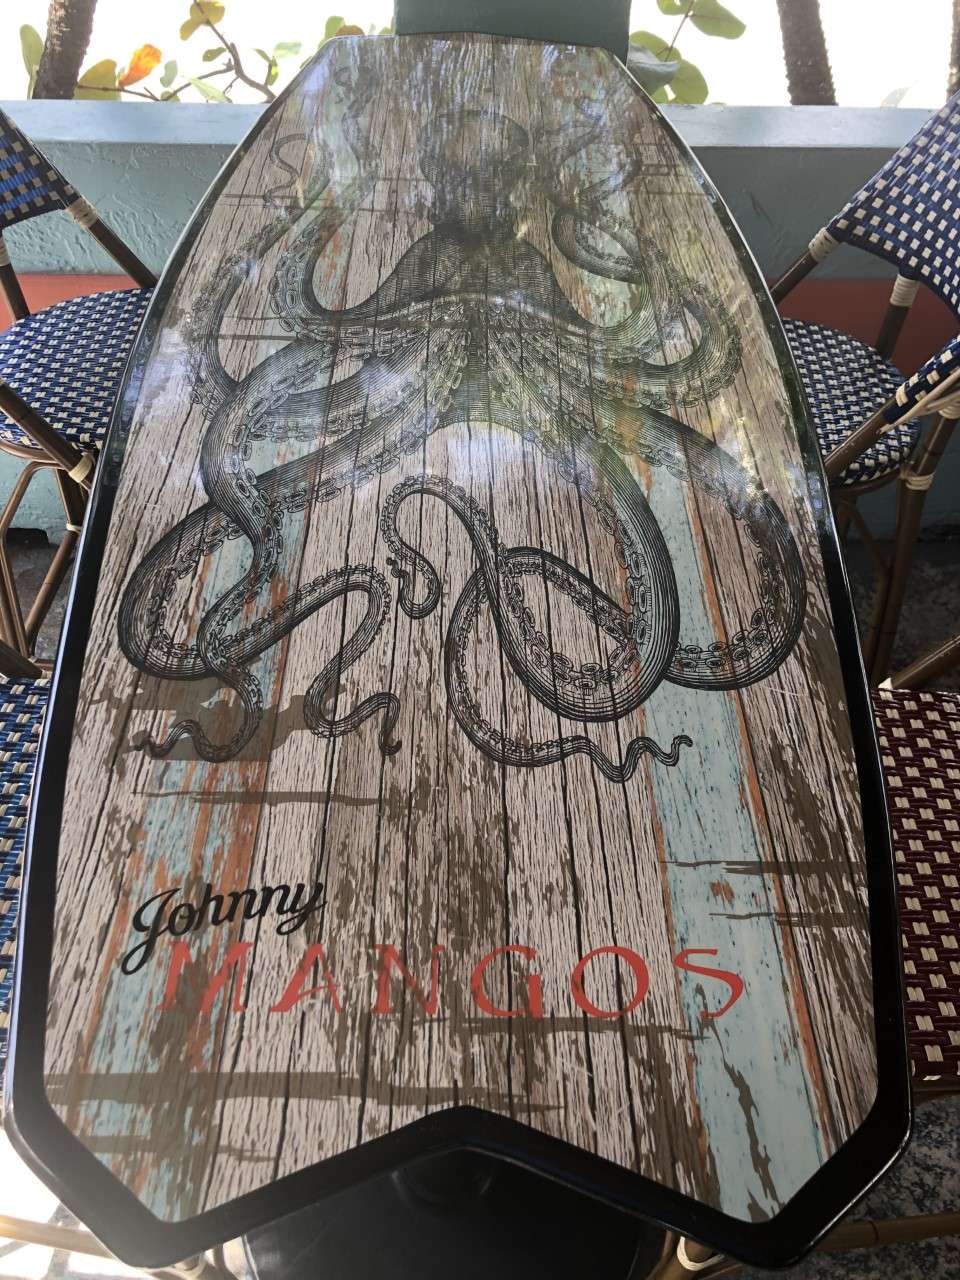 Surfboard Beach Coffee Table Octopus